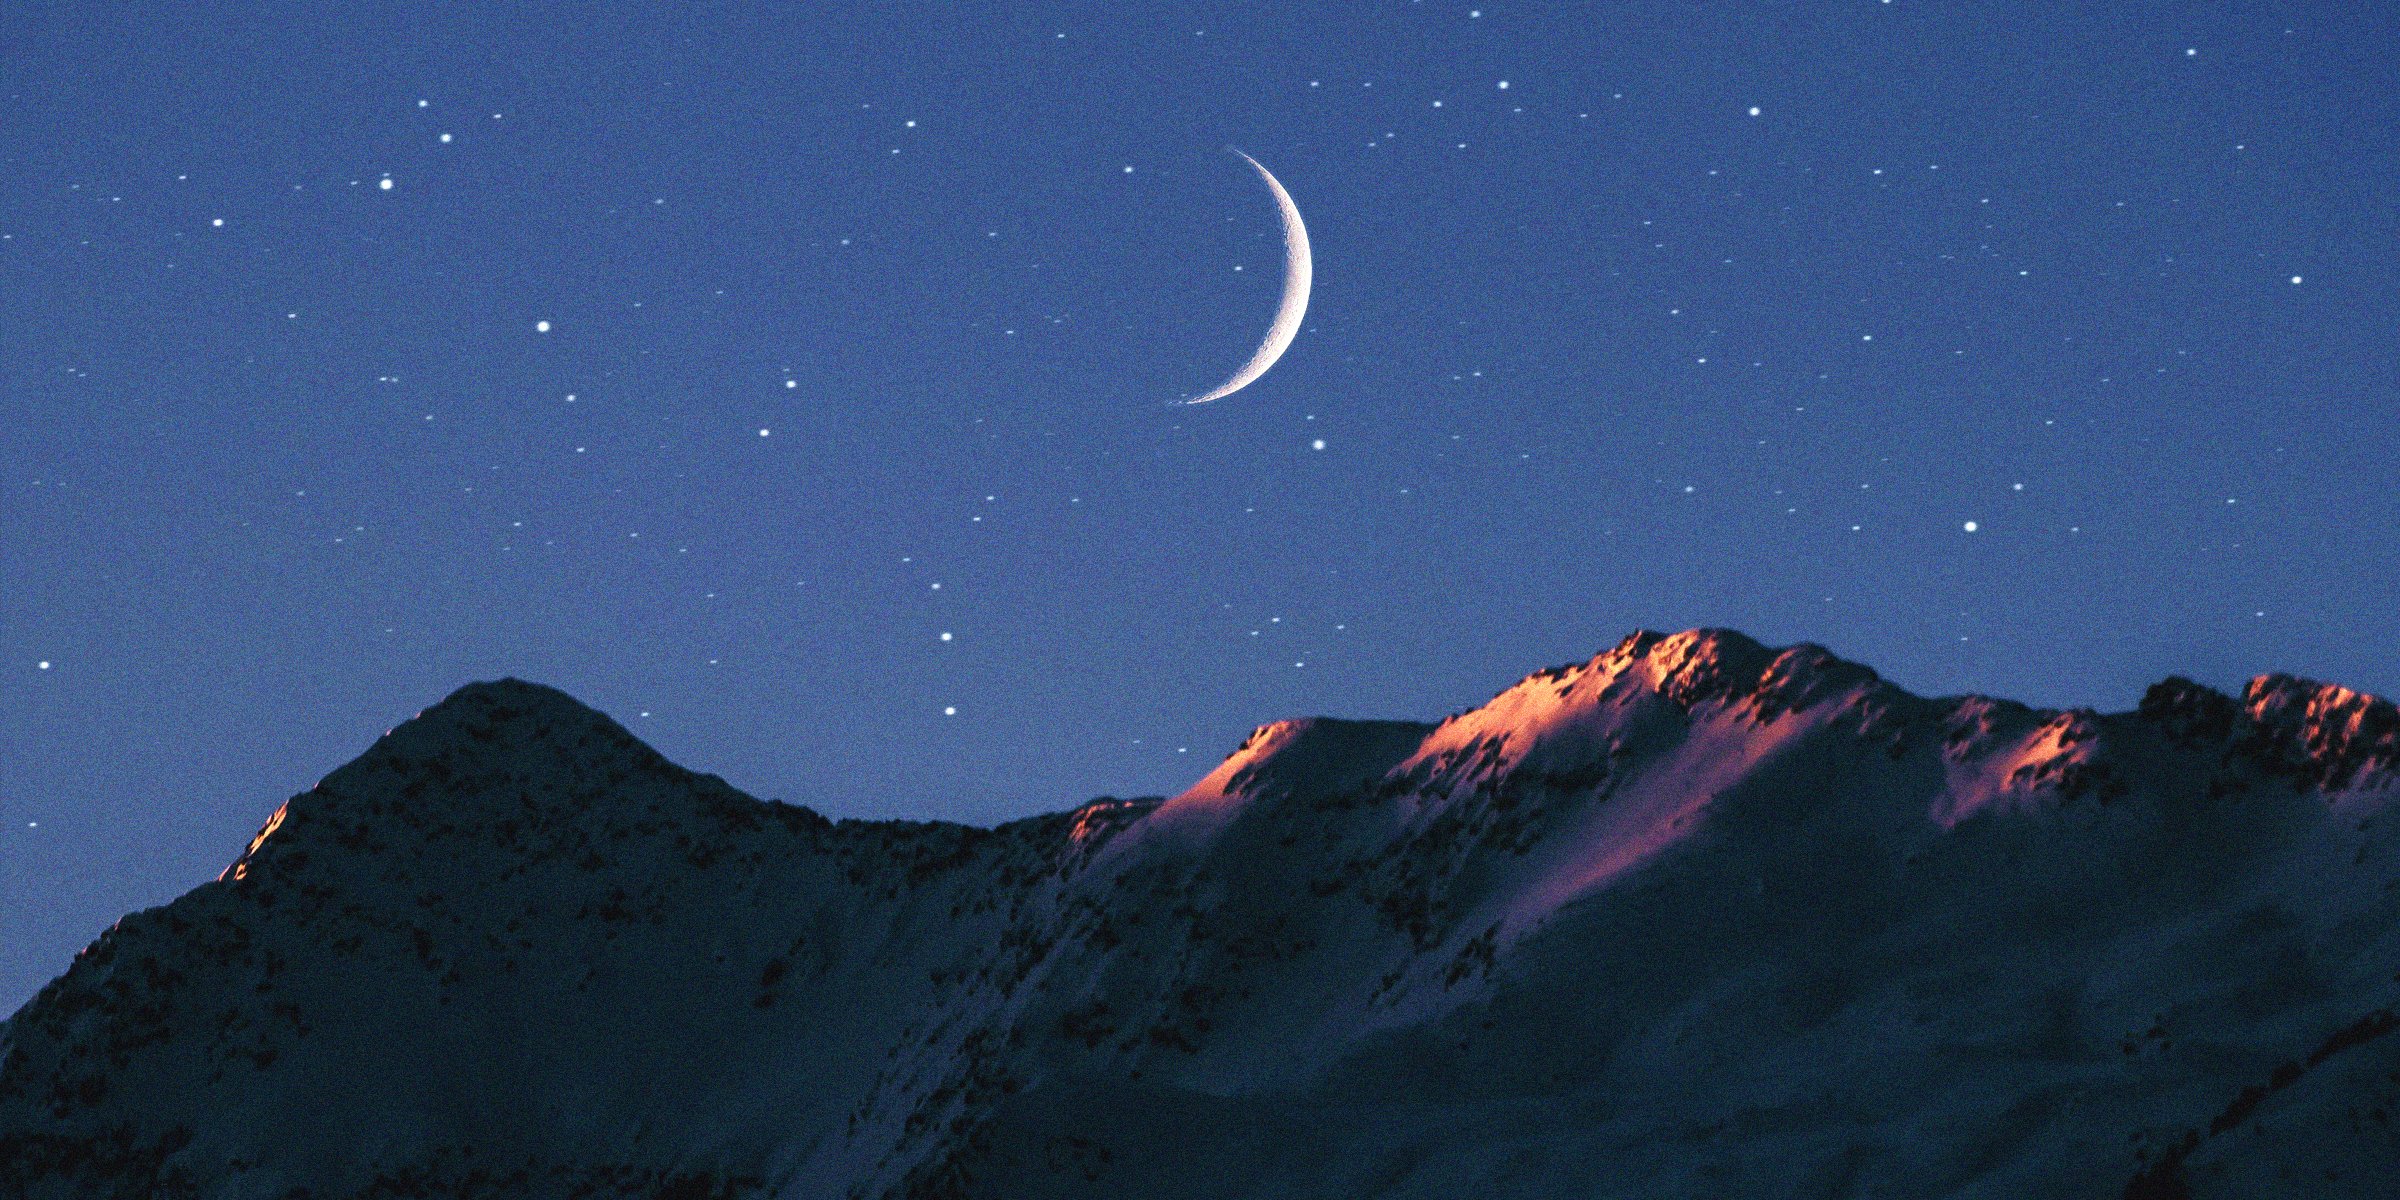 unsplash.com | Crescent Moon Over Mountains 